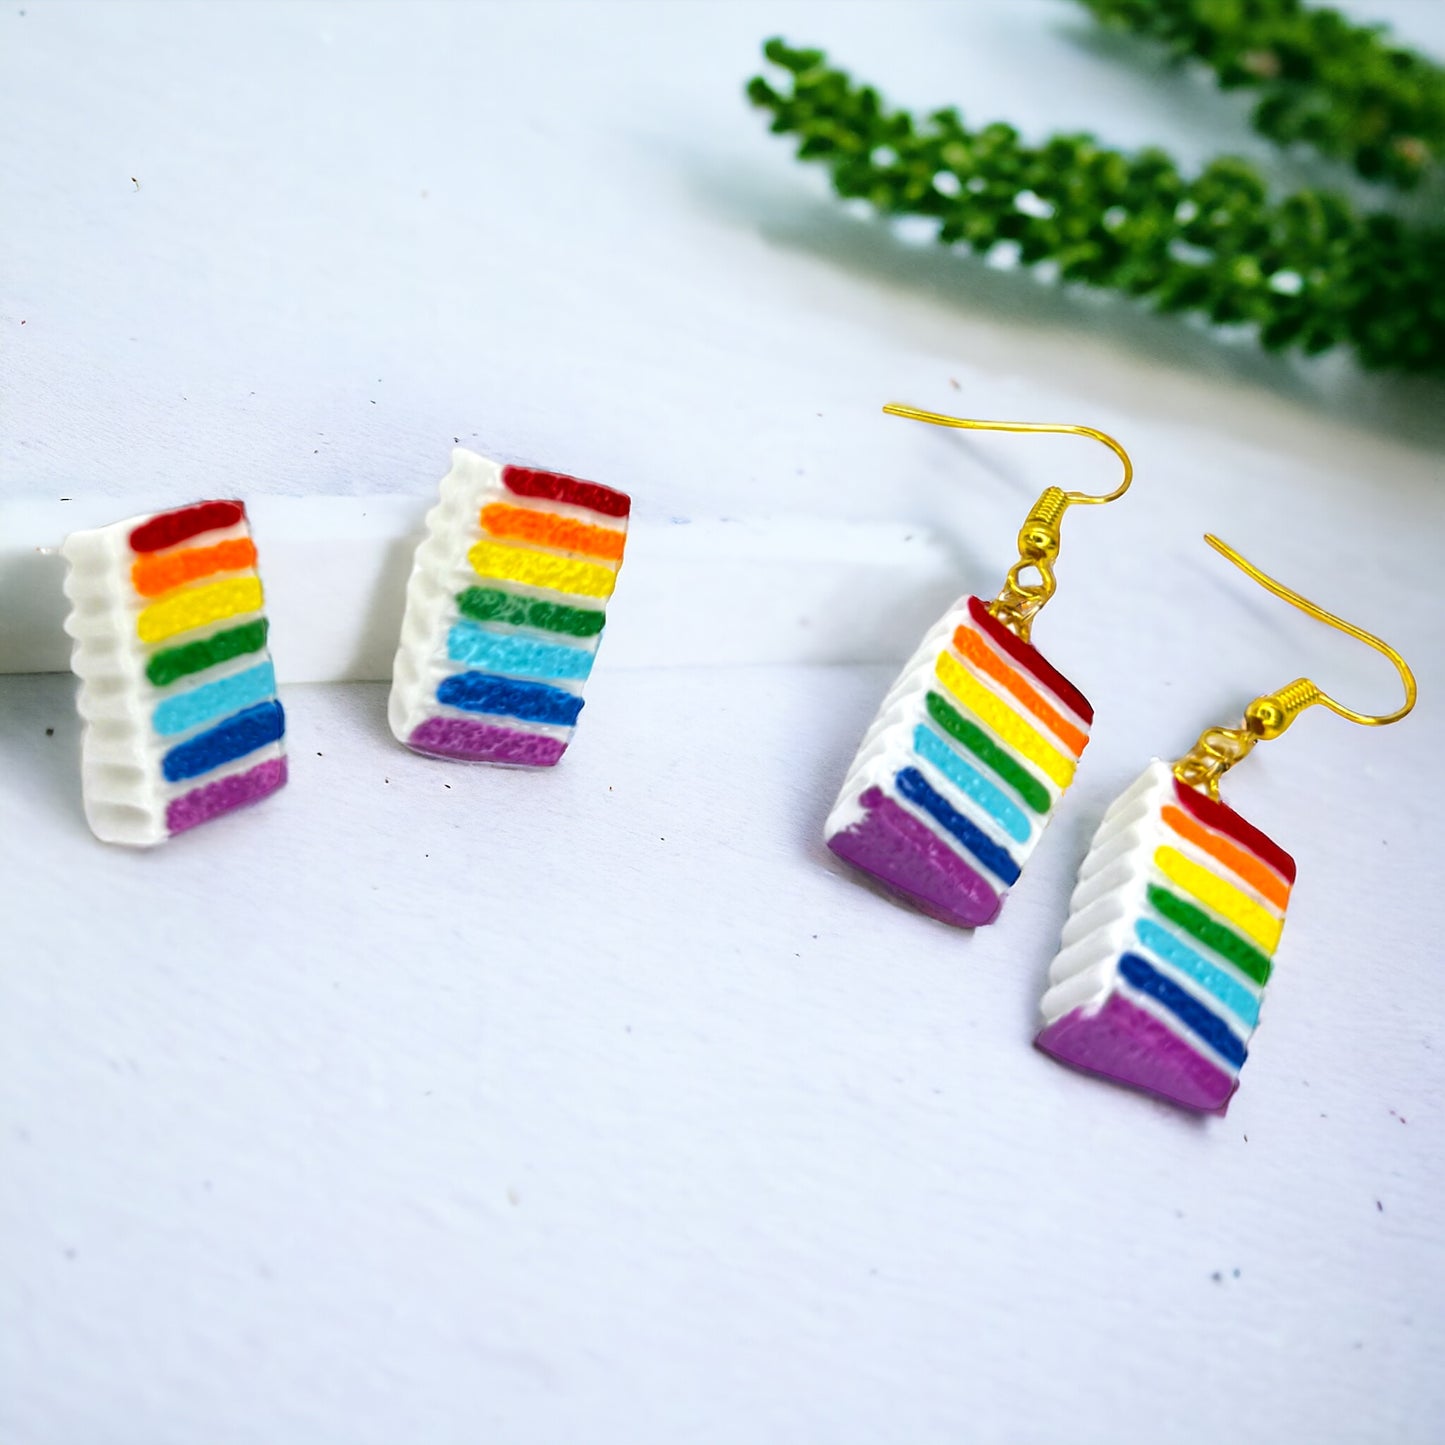 Doberge Cale Earrings - Doberge Earrings, Birthday Earrings, Handmade Jewelry, Rainbow Earrings, Food Earrings, Cake Earrings, Rainbow Accessories, Rainbow Doberge